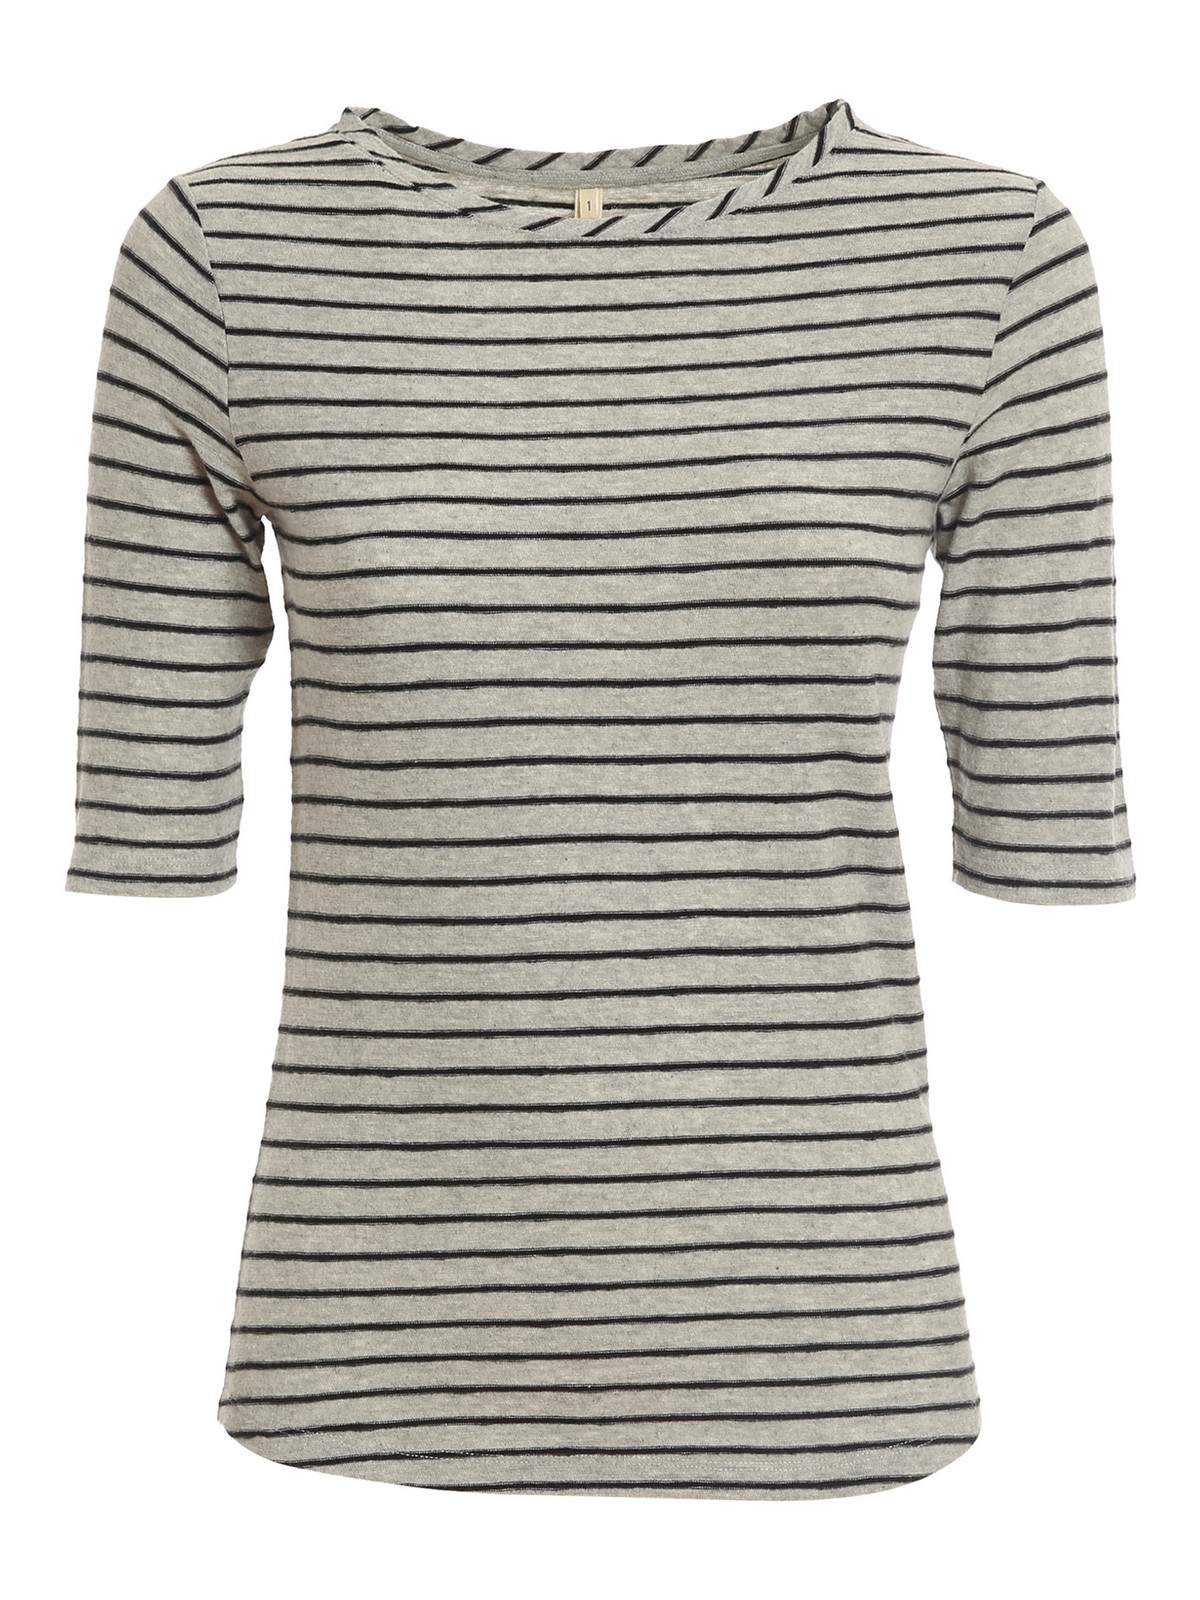 T-shirts Bellerose - Striped T-shirt - T1546STC | Shop online at iKRIX